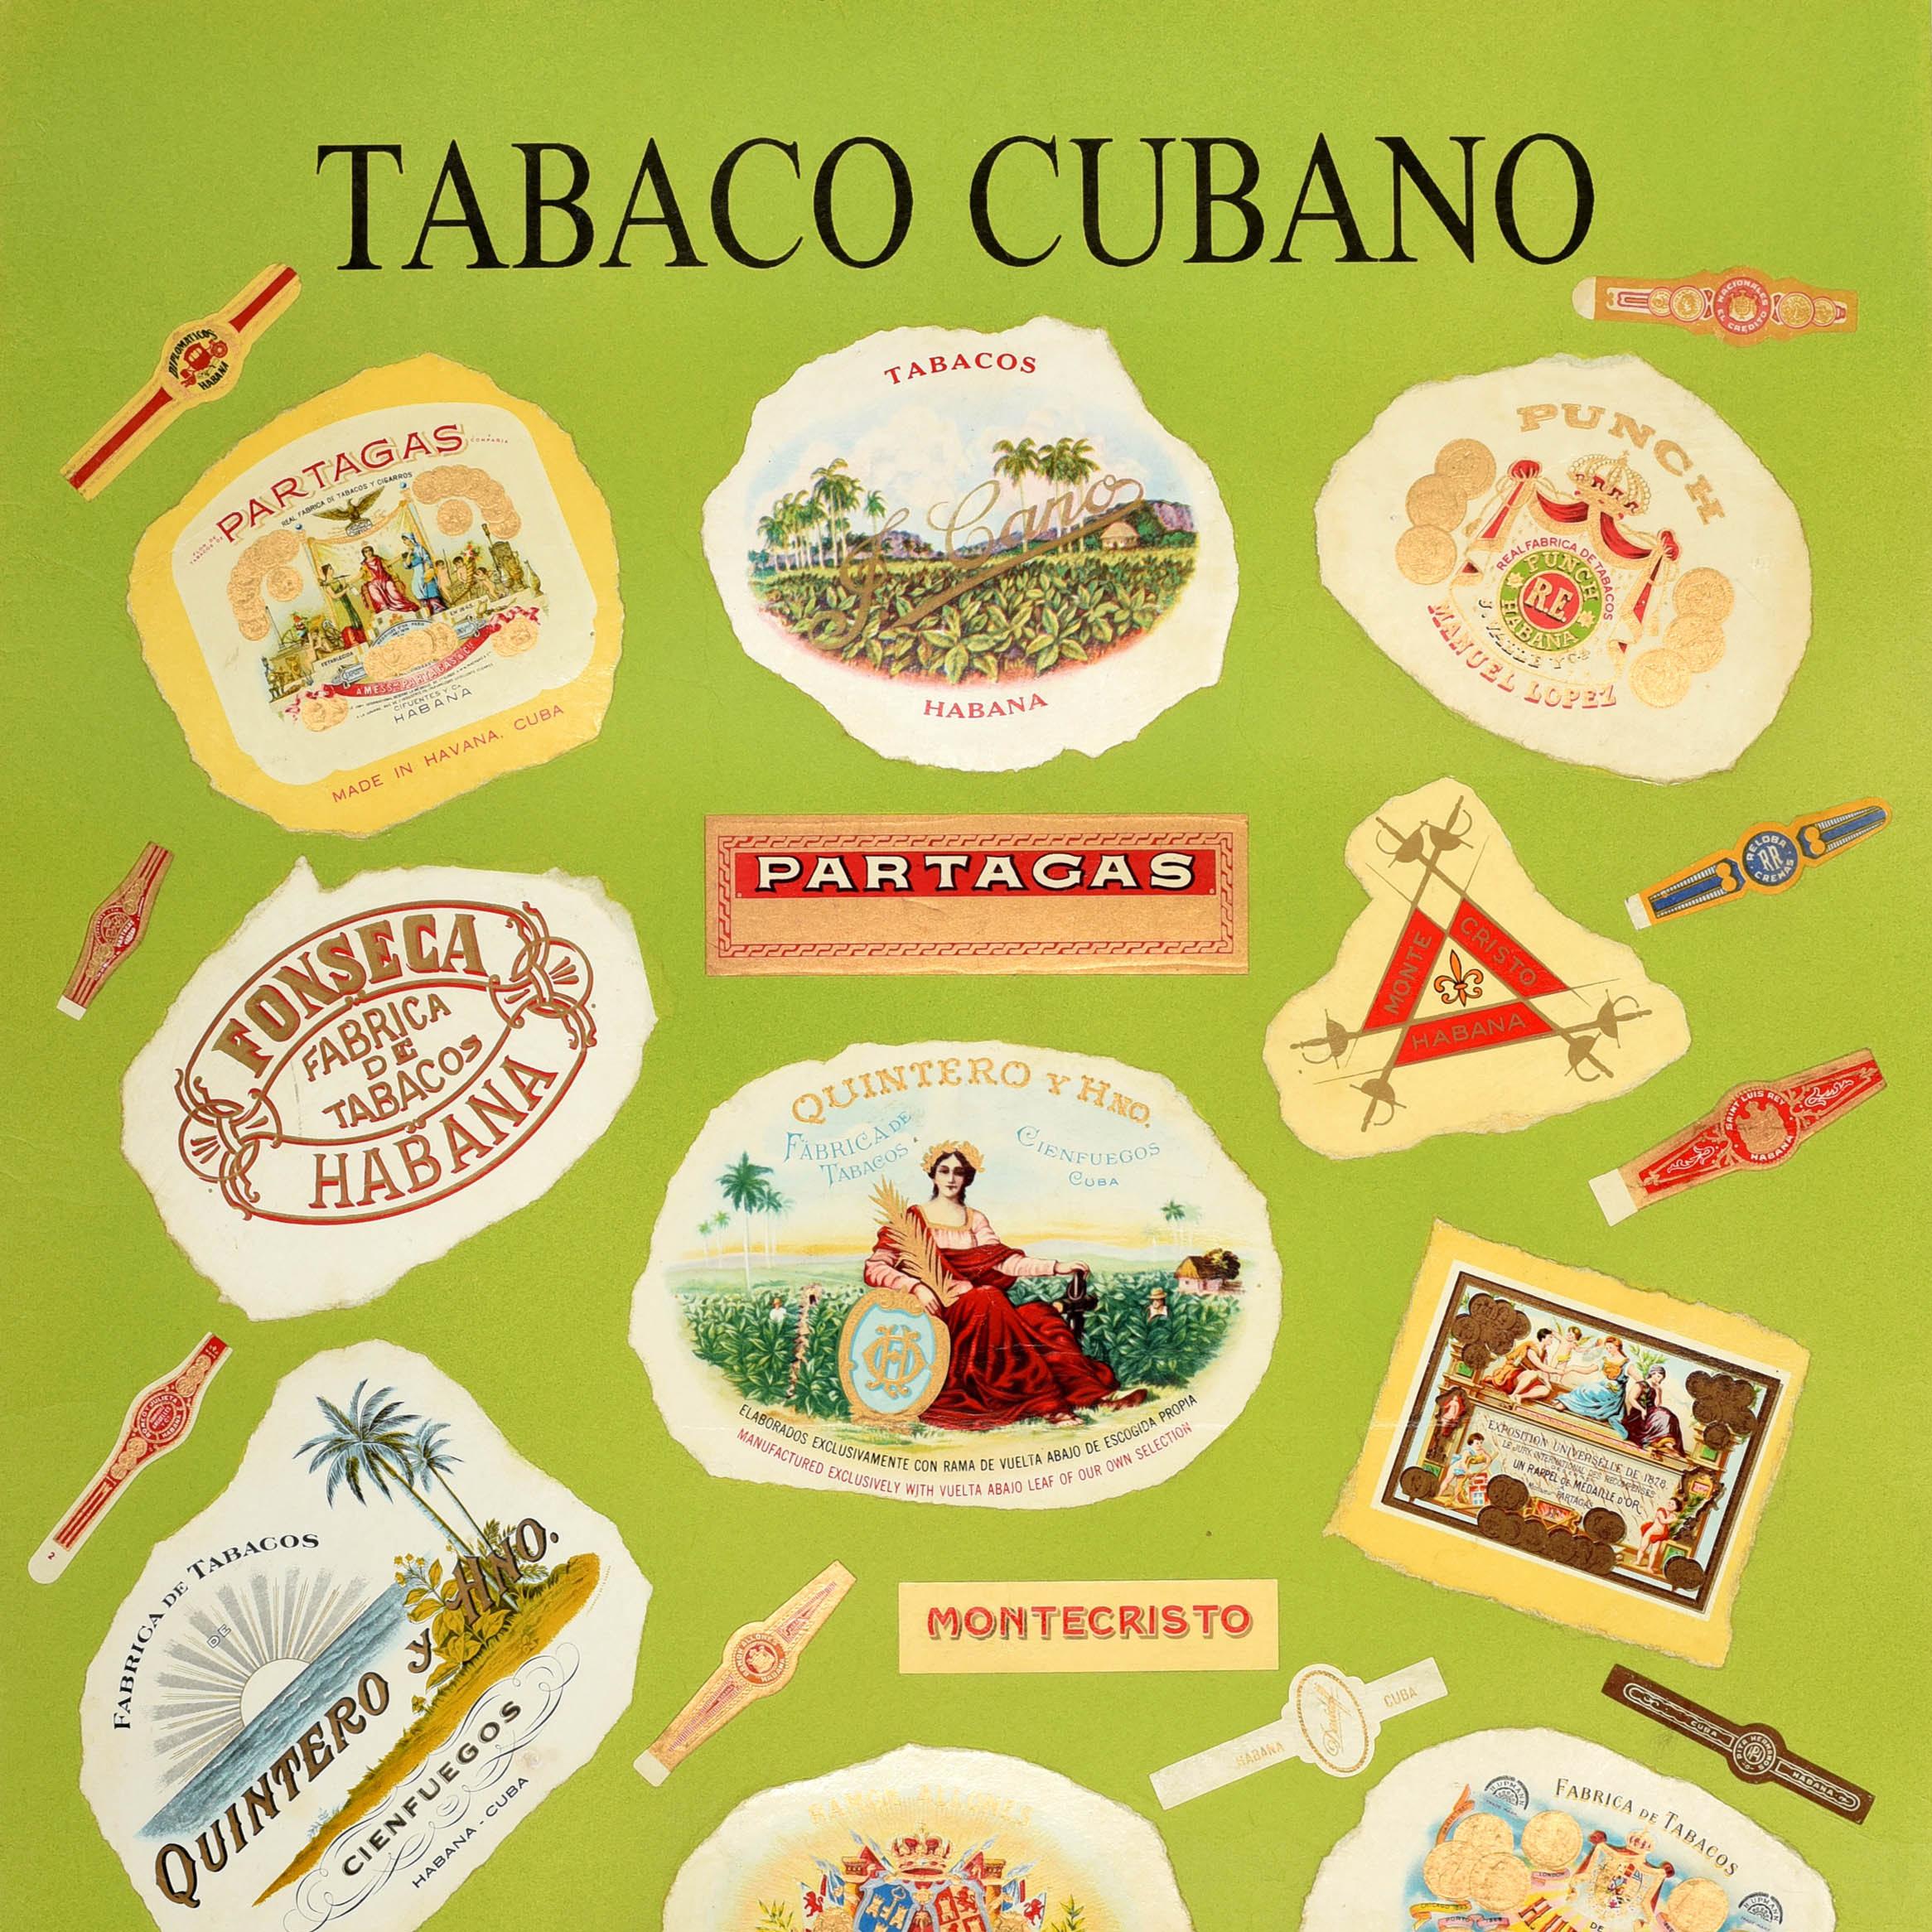 Original Vintage Advertising Poster Cuba Cigars Cuban Tobacco Tabaco Cubano - Green Print by Unknown